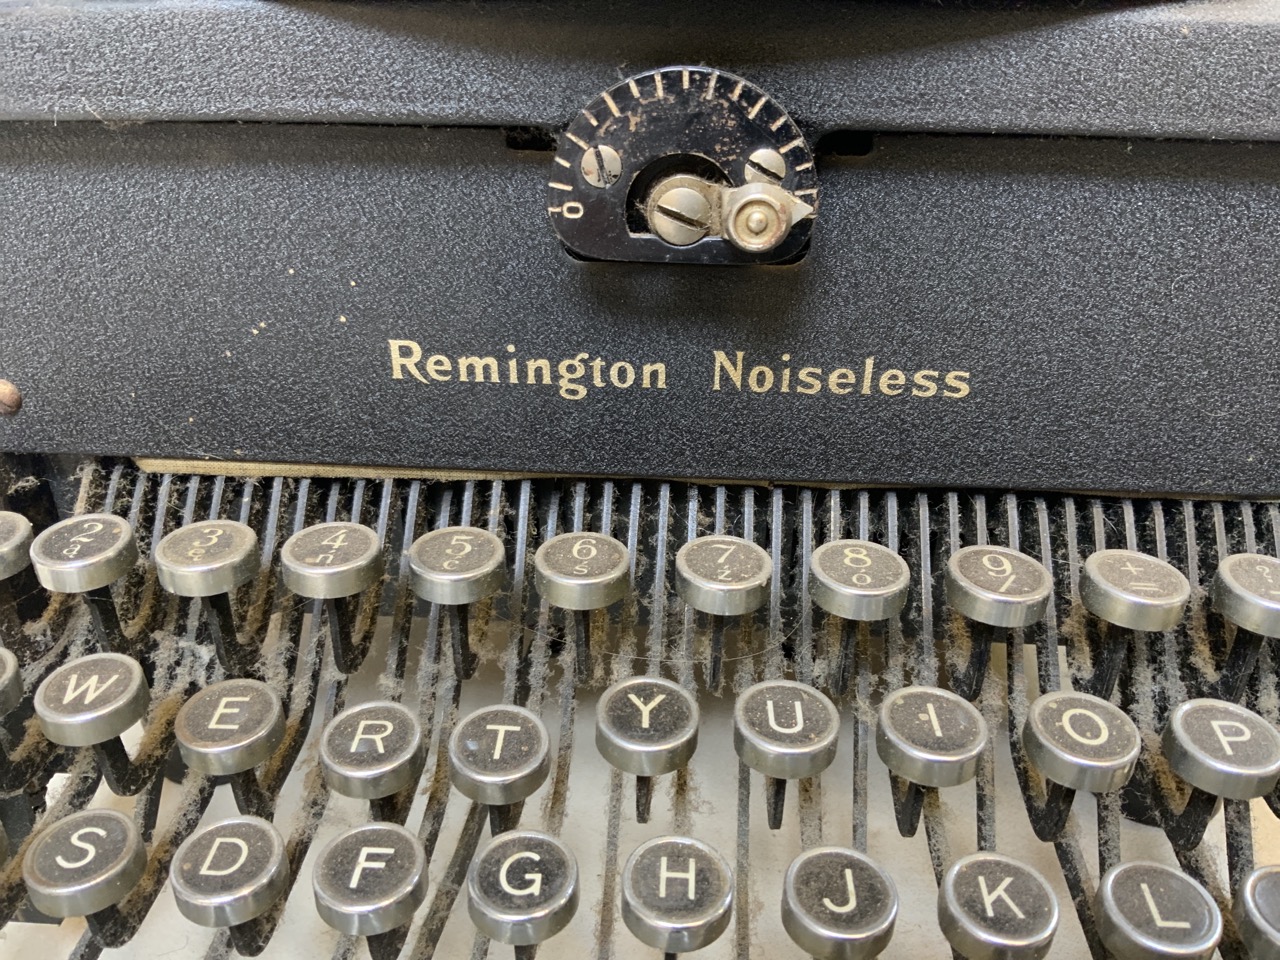 A Remington Noiseless typewriter. - Image 3 of 5